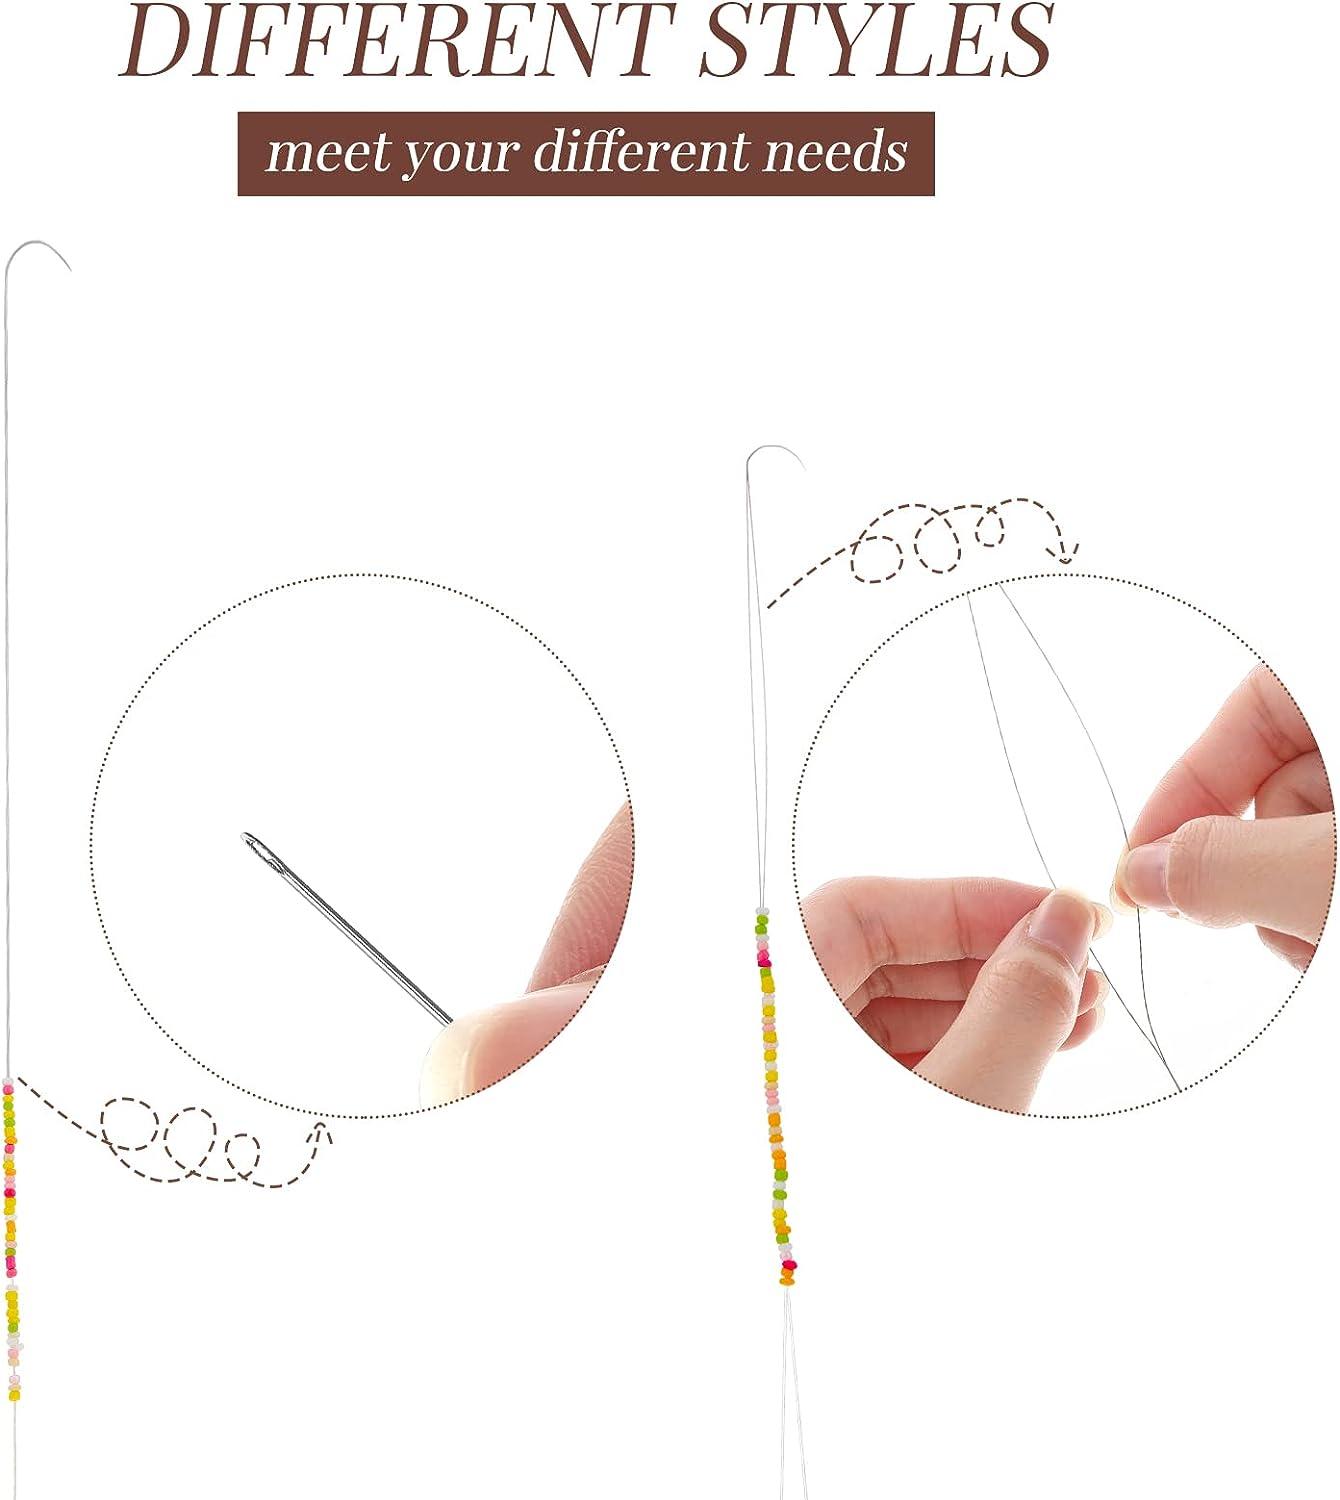 How to use a Big Eye Beading Needle, 4.5 Inch 